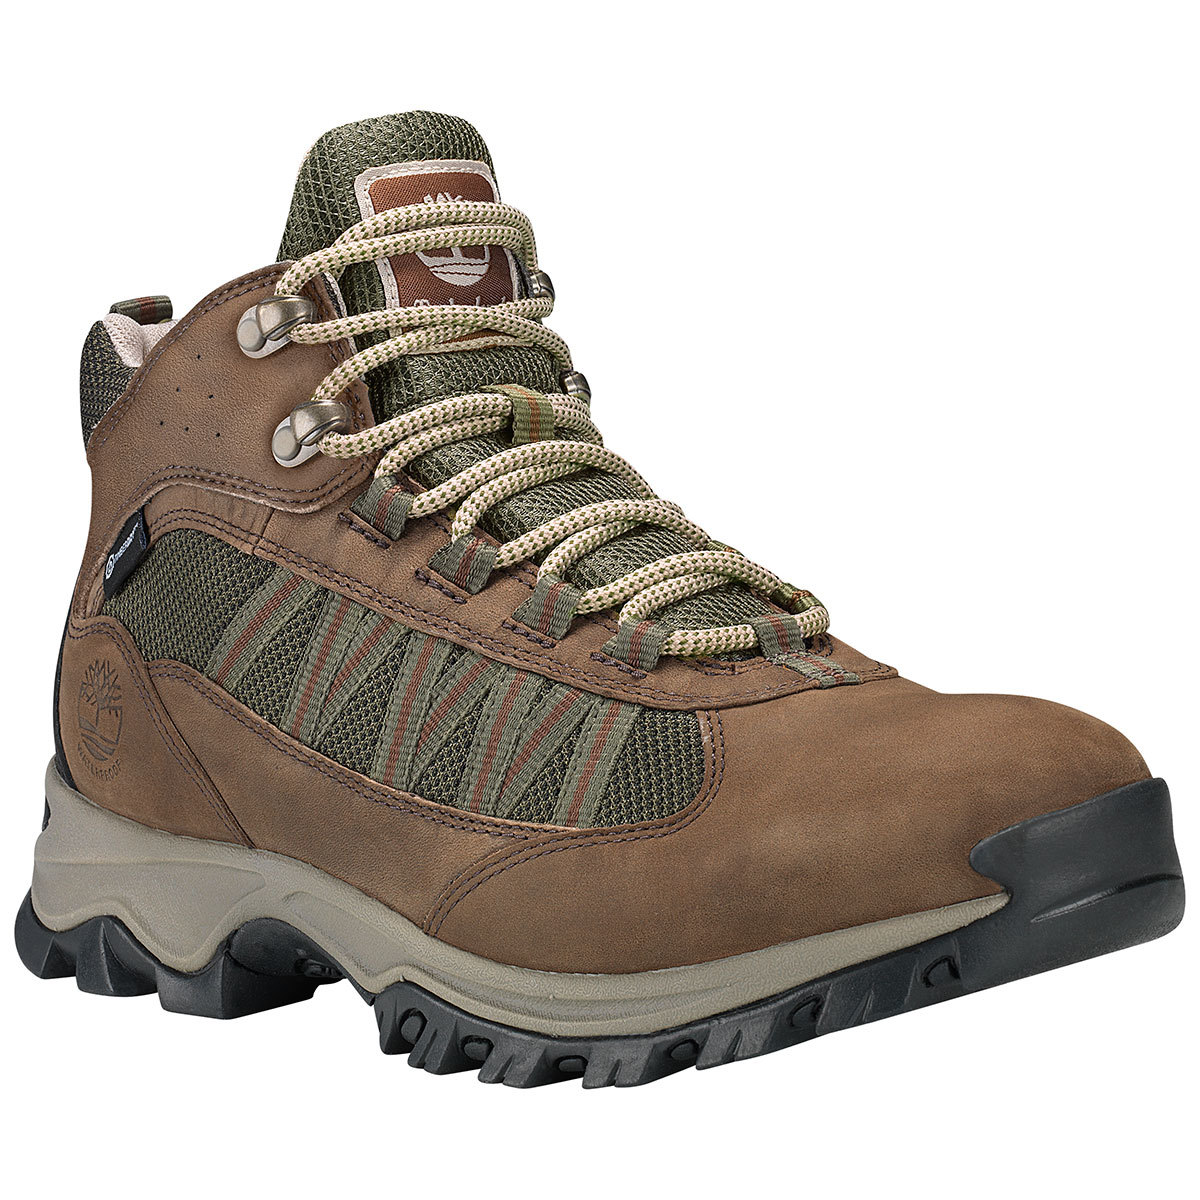 Timberland Men's Mt. Maddsen Lite Mid Waterproof Hiking Boots - Brown, 8.5